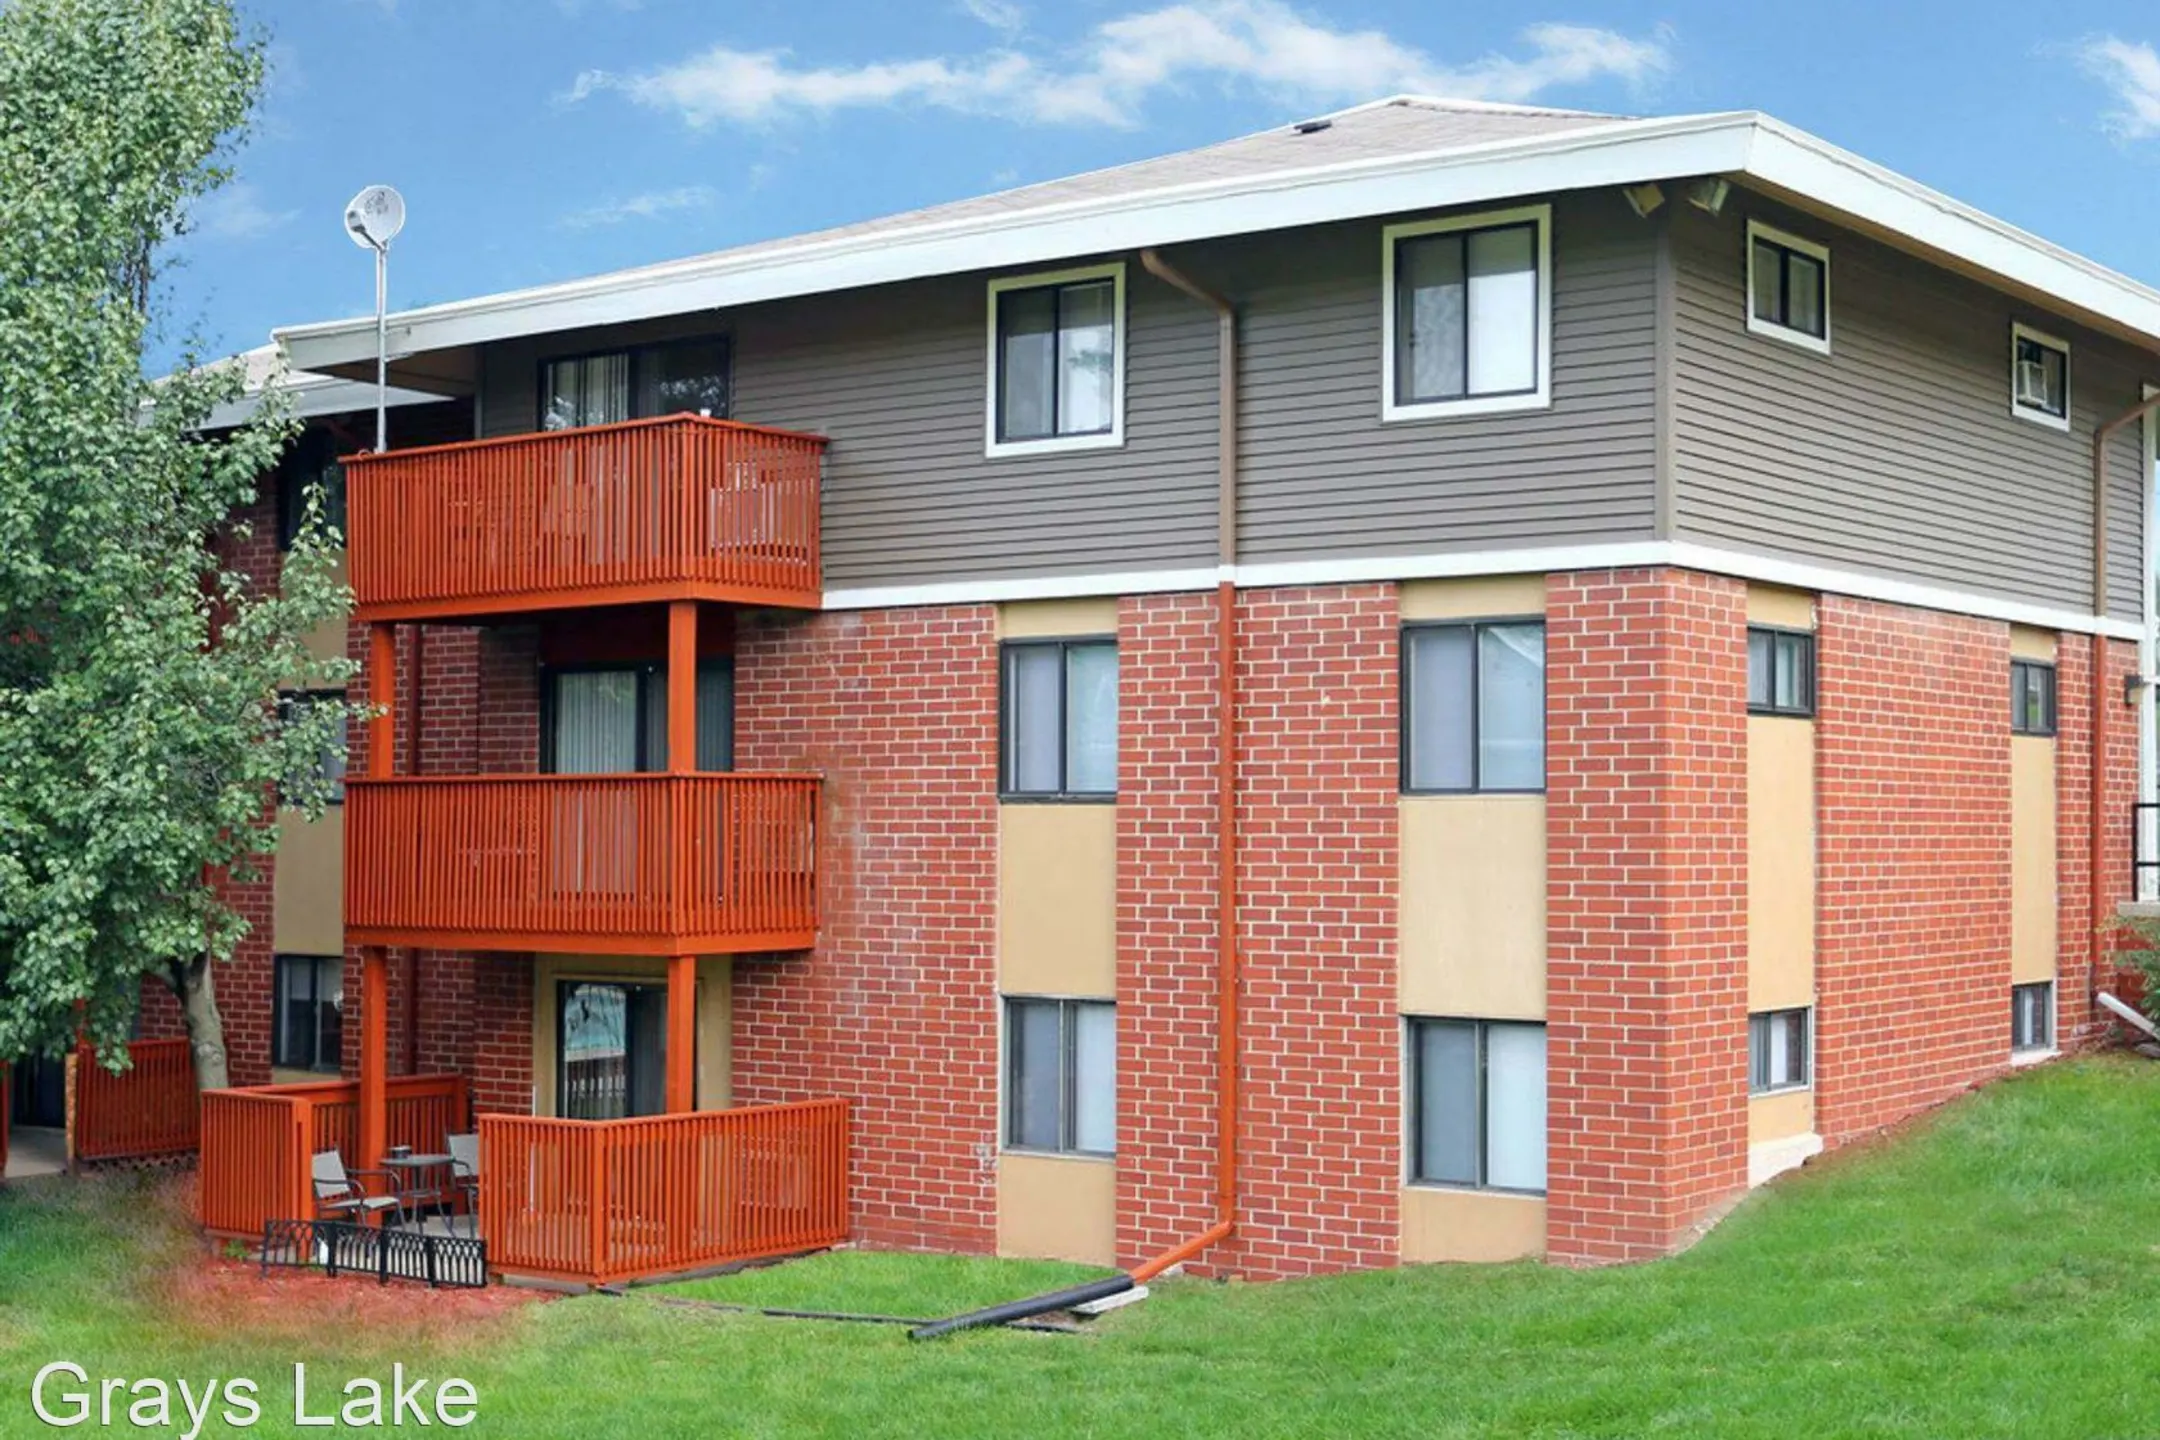 Building - Gray's Lake Apartments - Des Moines, IA